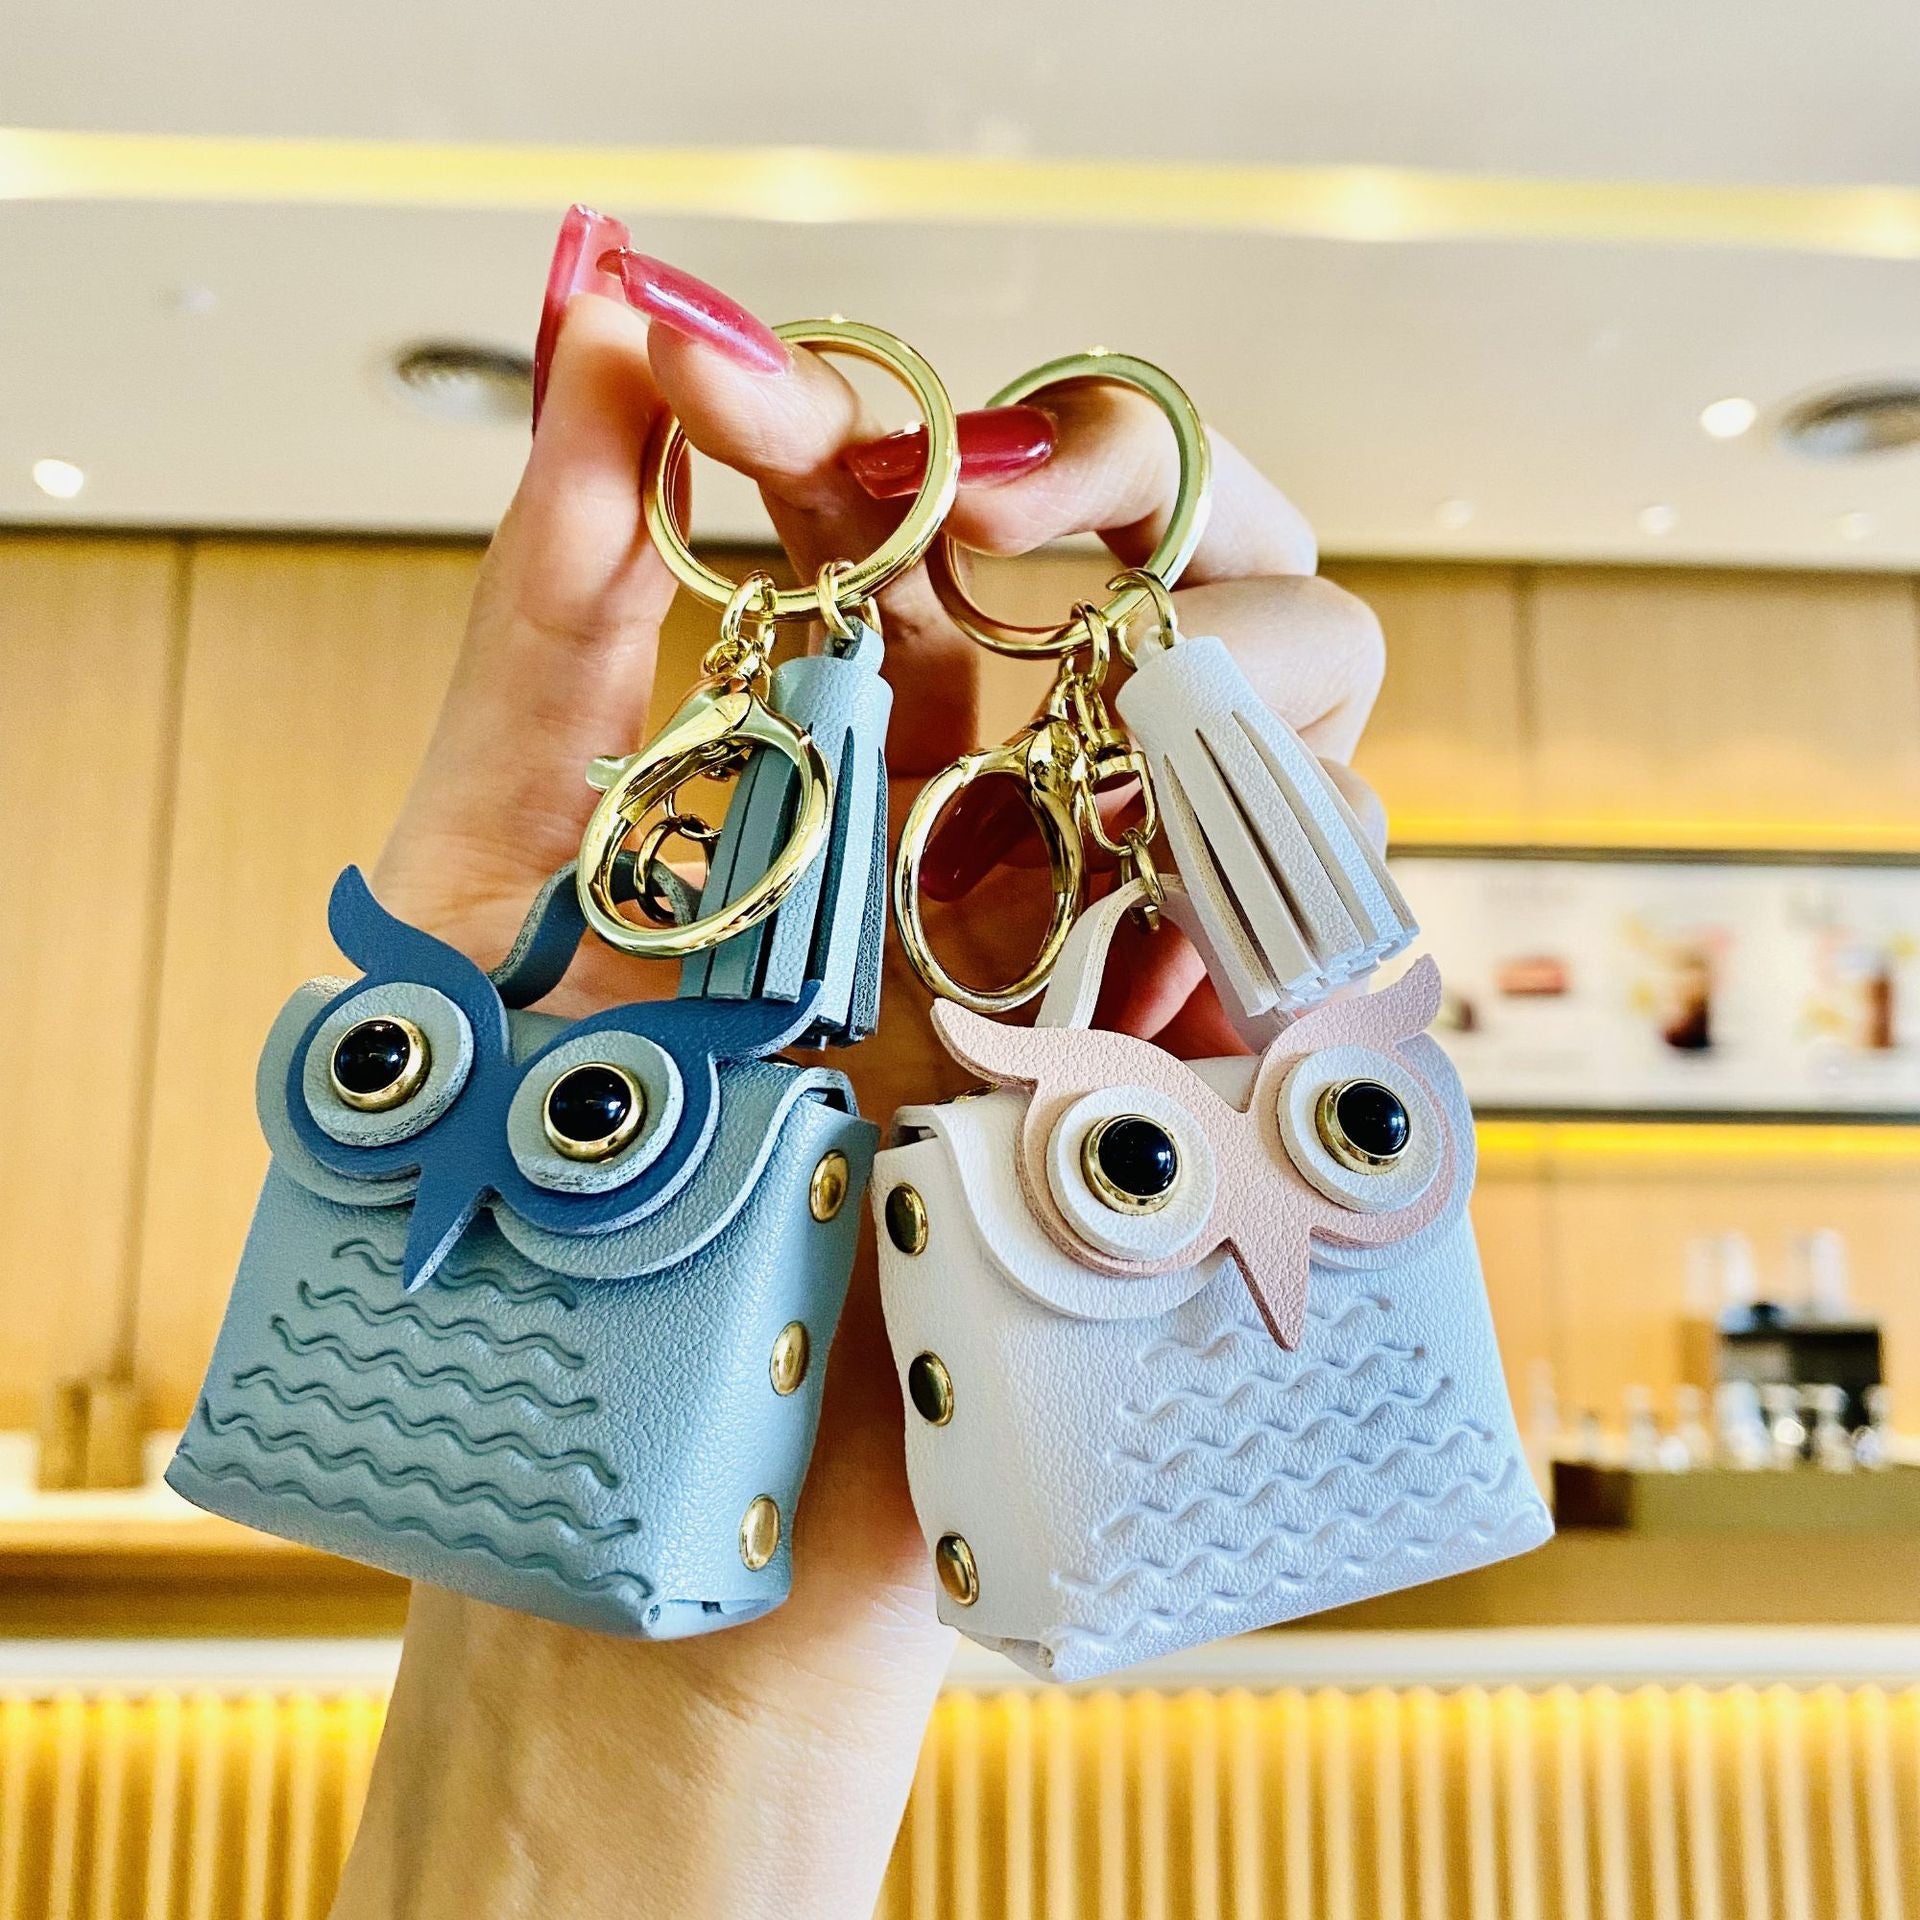 MultiPurpose Cute Mini Bag Keychain